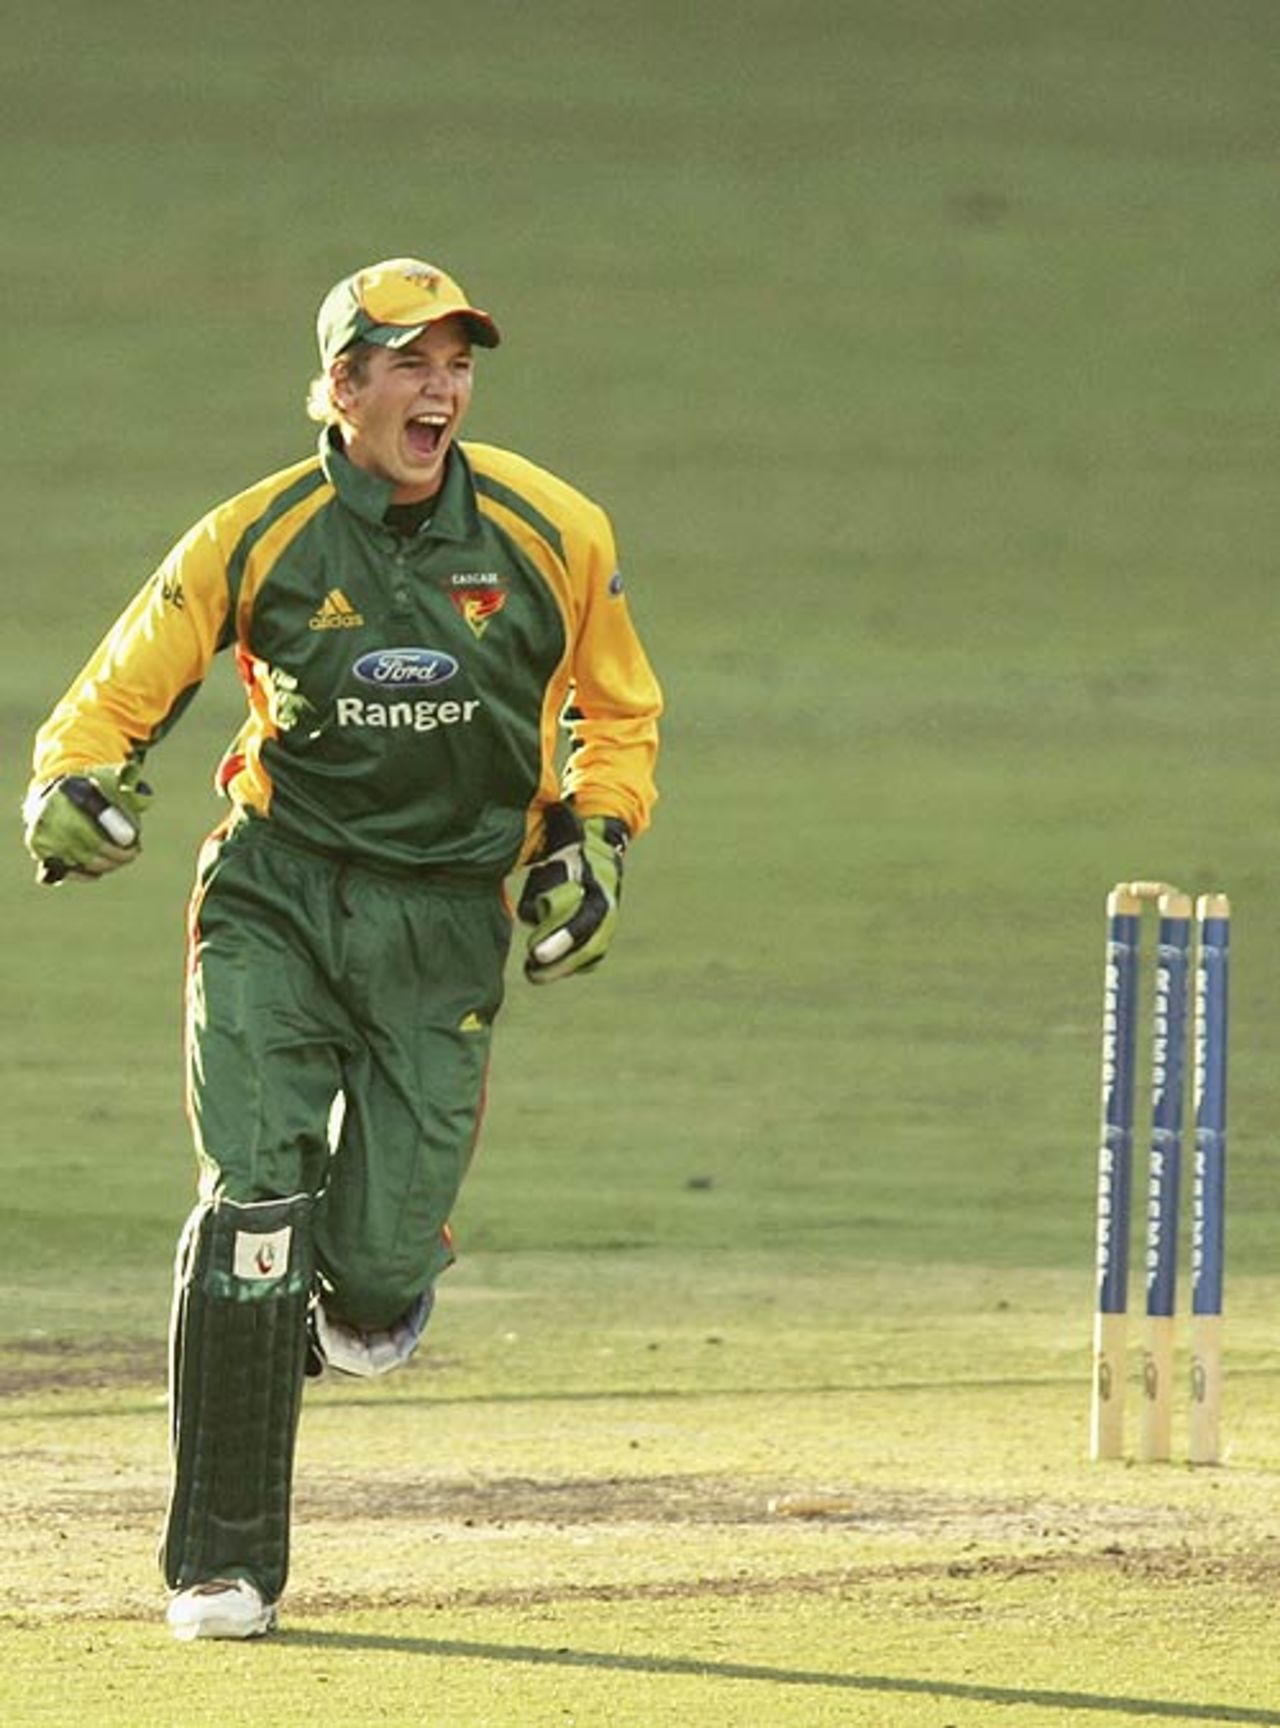 Tim Paine celebrates a wicket, South Australia v Tasmania, Ford Ranger Cup, Adelaide, February 21, 2007